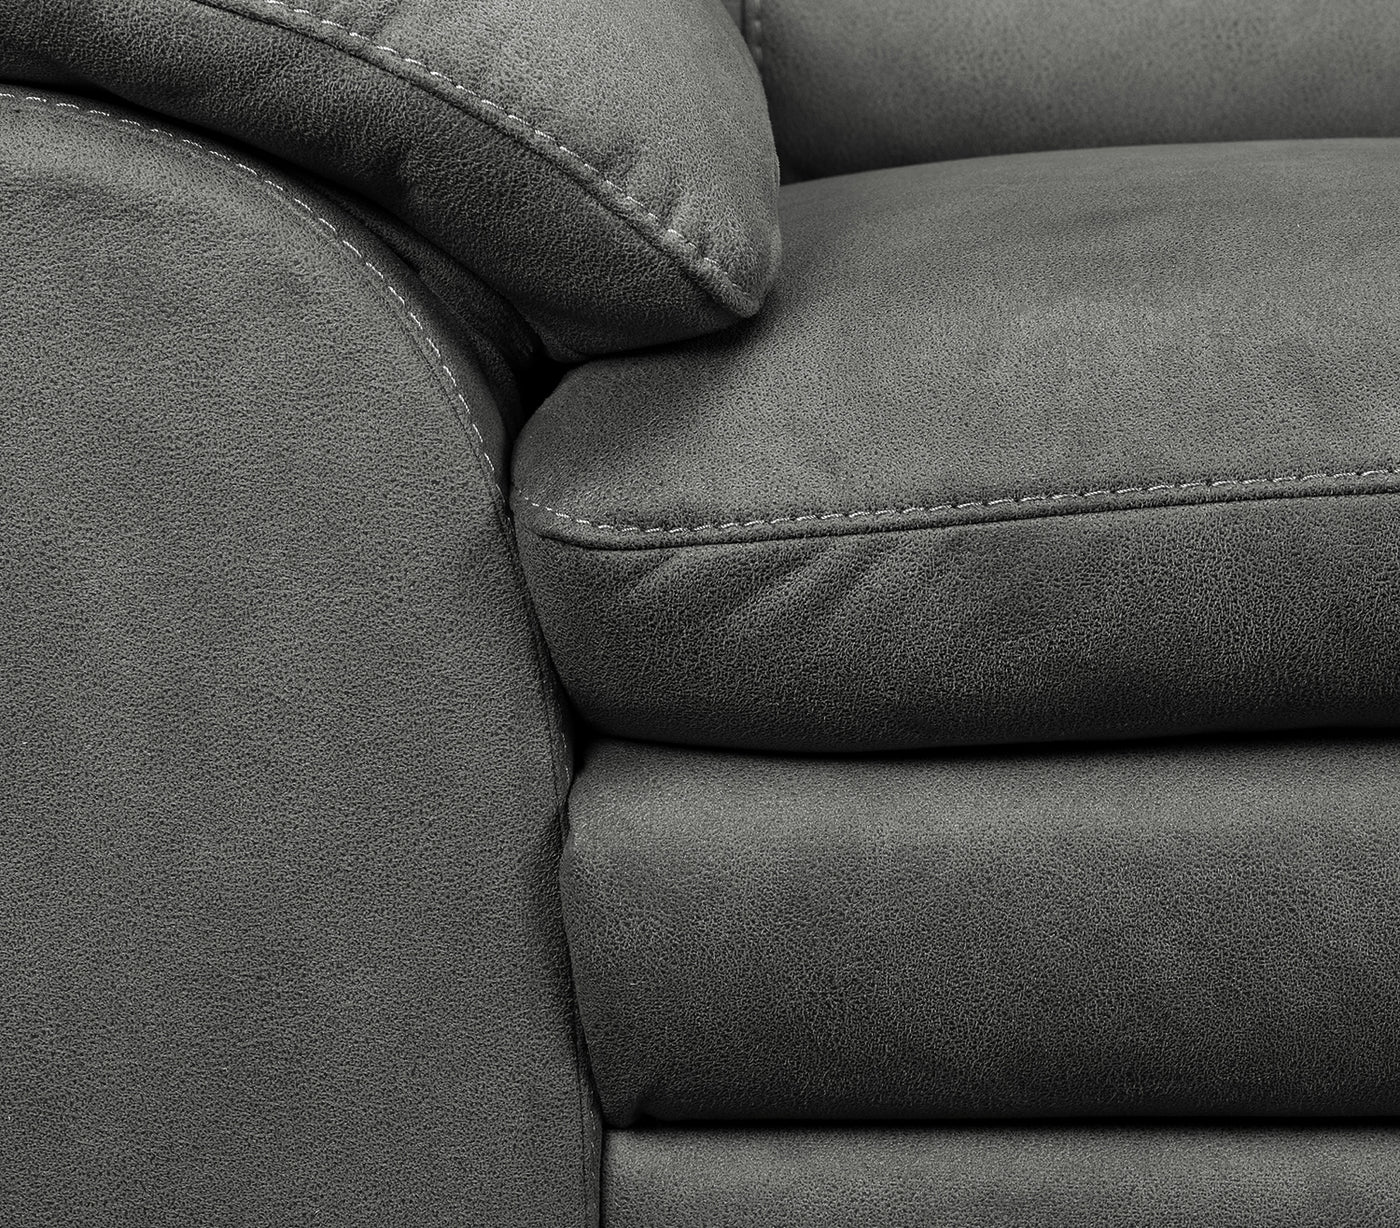 Kelleher Sofa and Chair - Charcoal